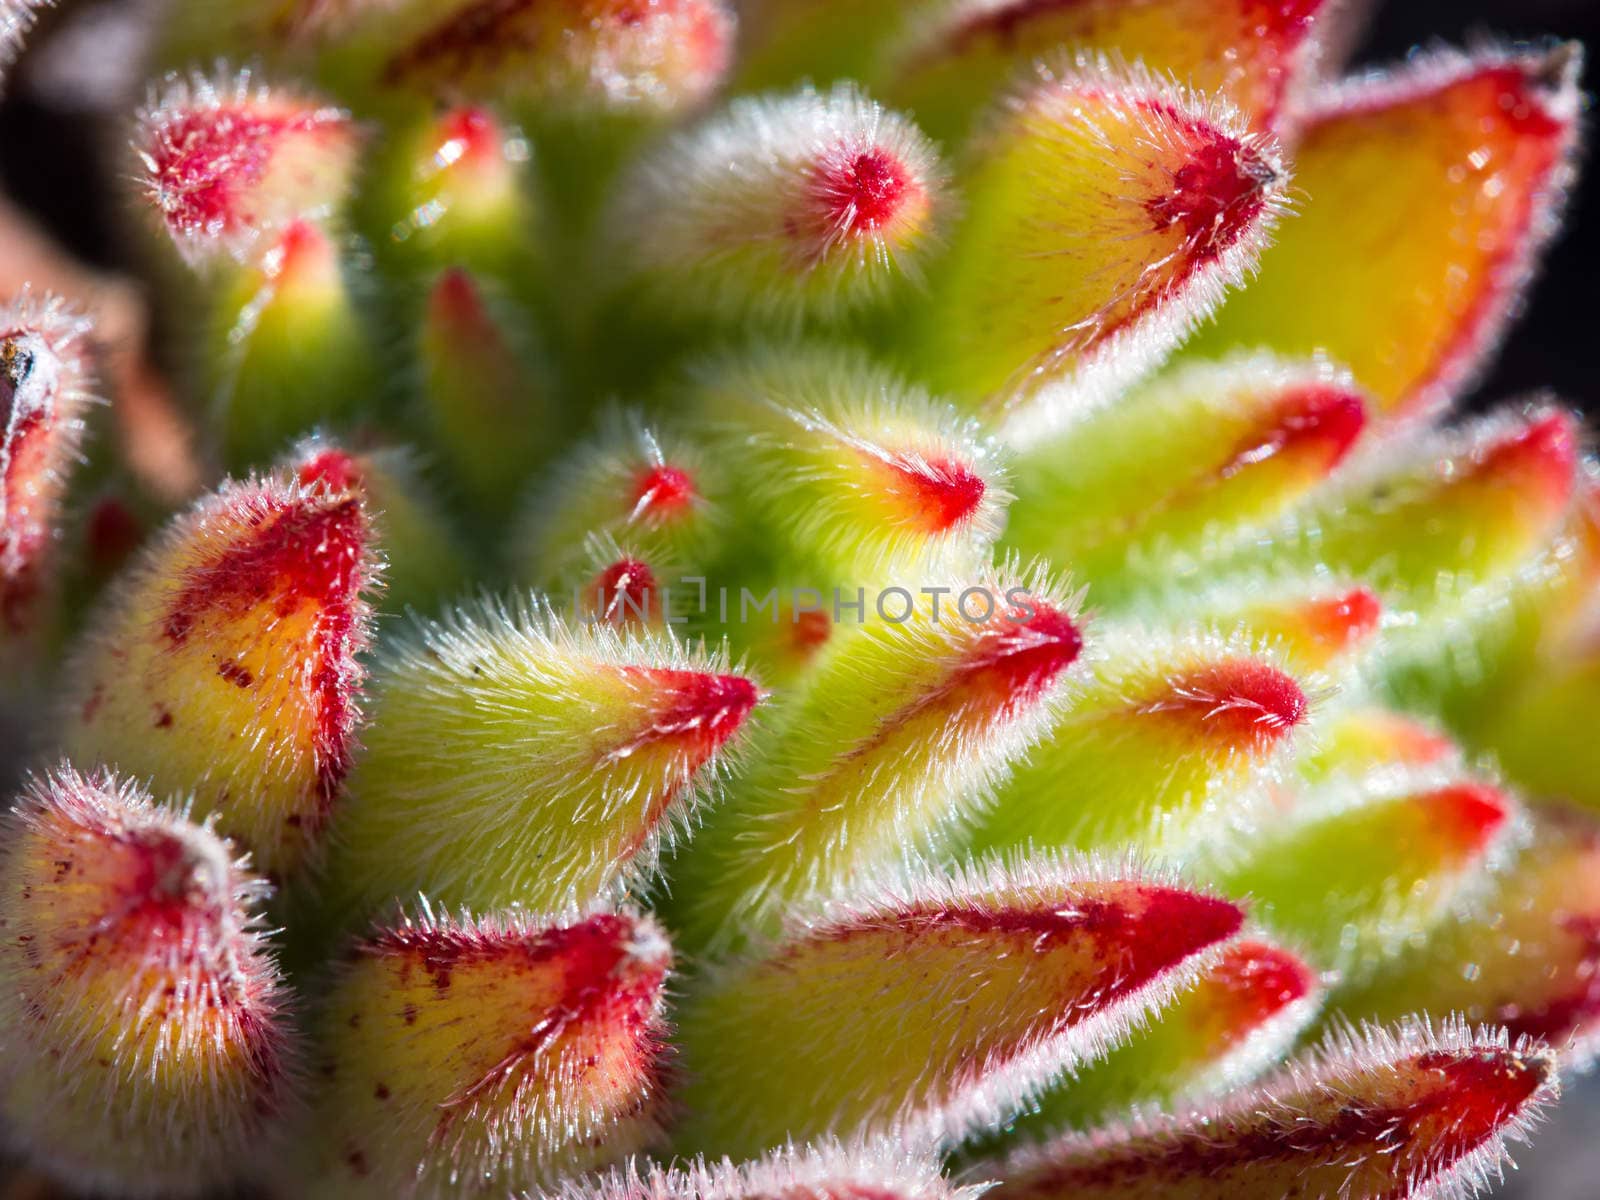 Fresh and juicy Succulent Close-up / Macro shot